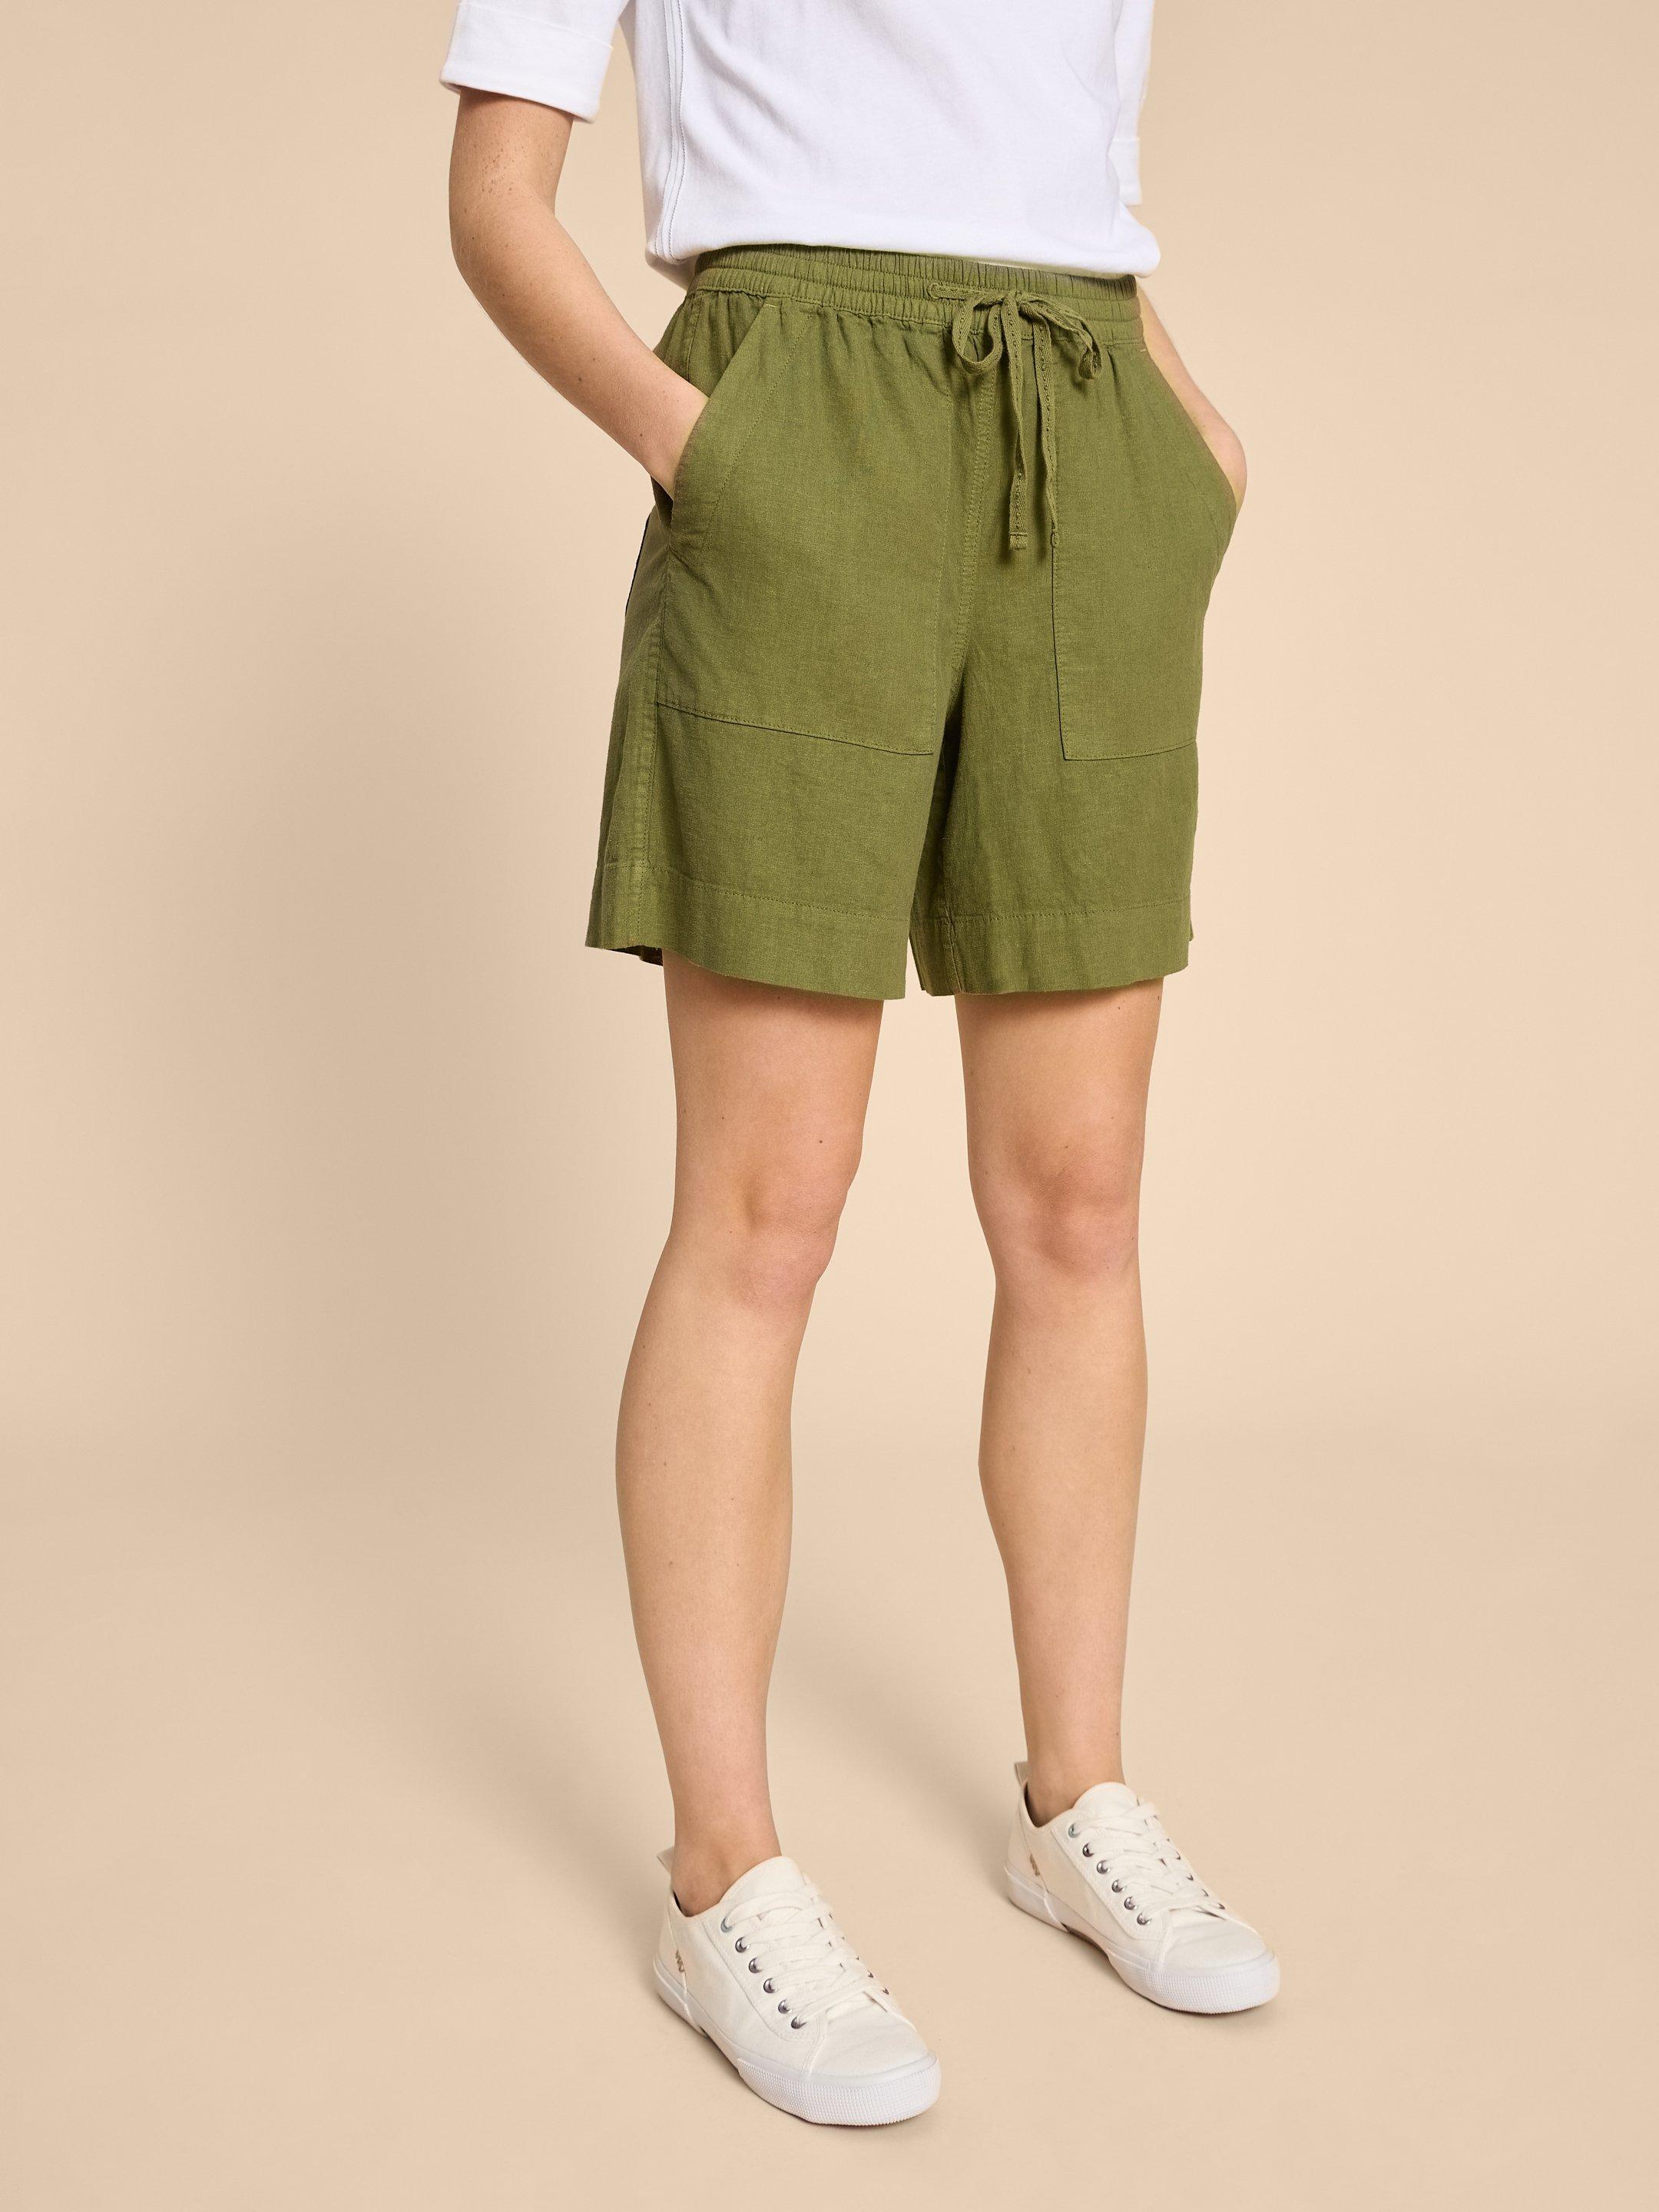 Elle Linen Blend Short in DK GREEN - MODEL FRONT